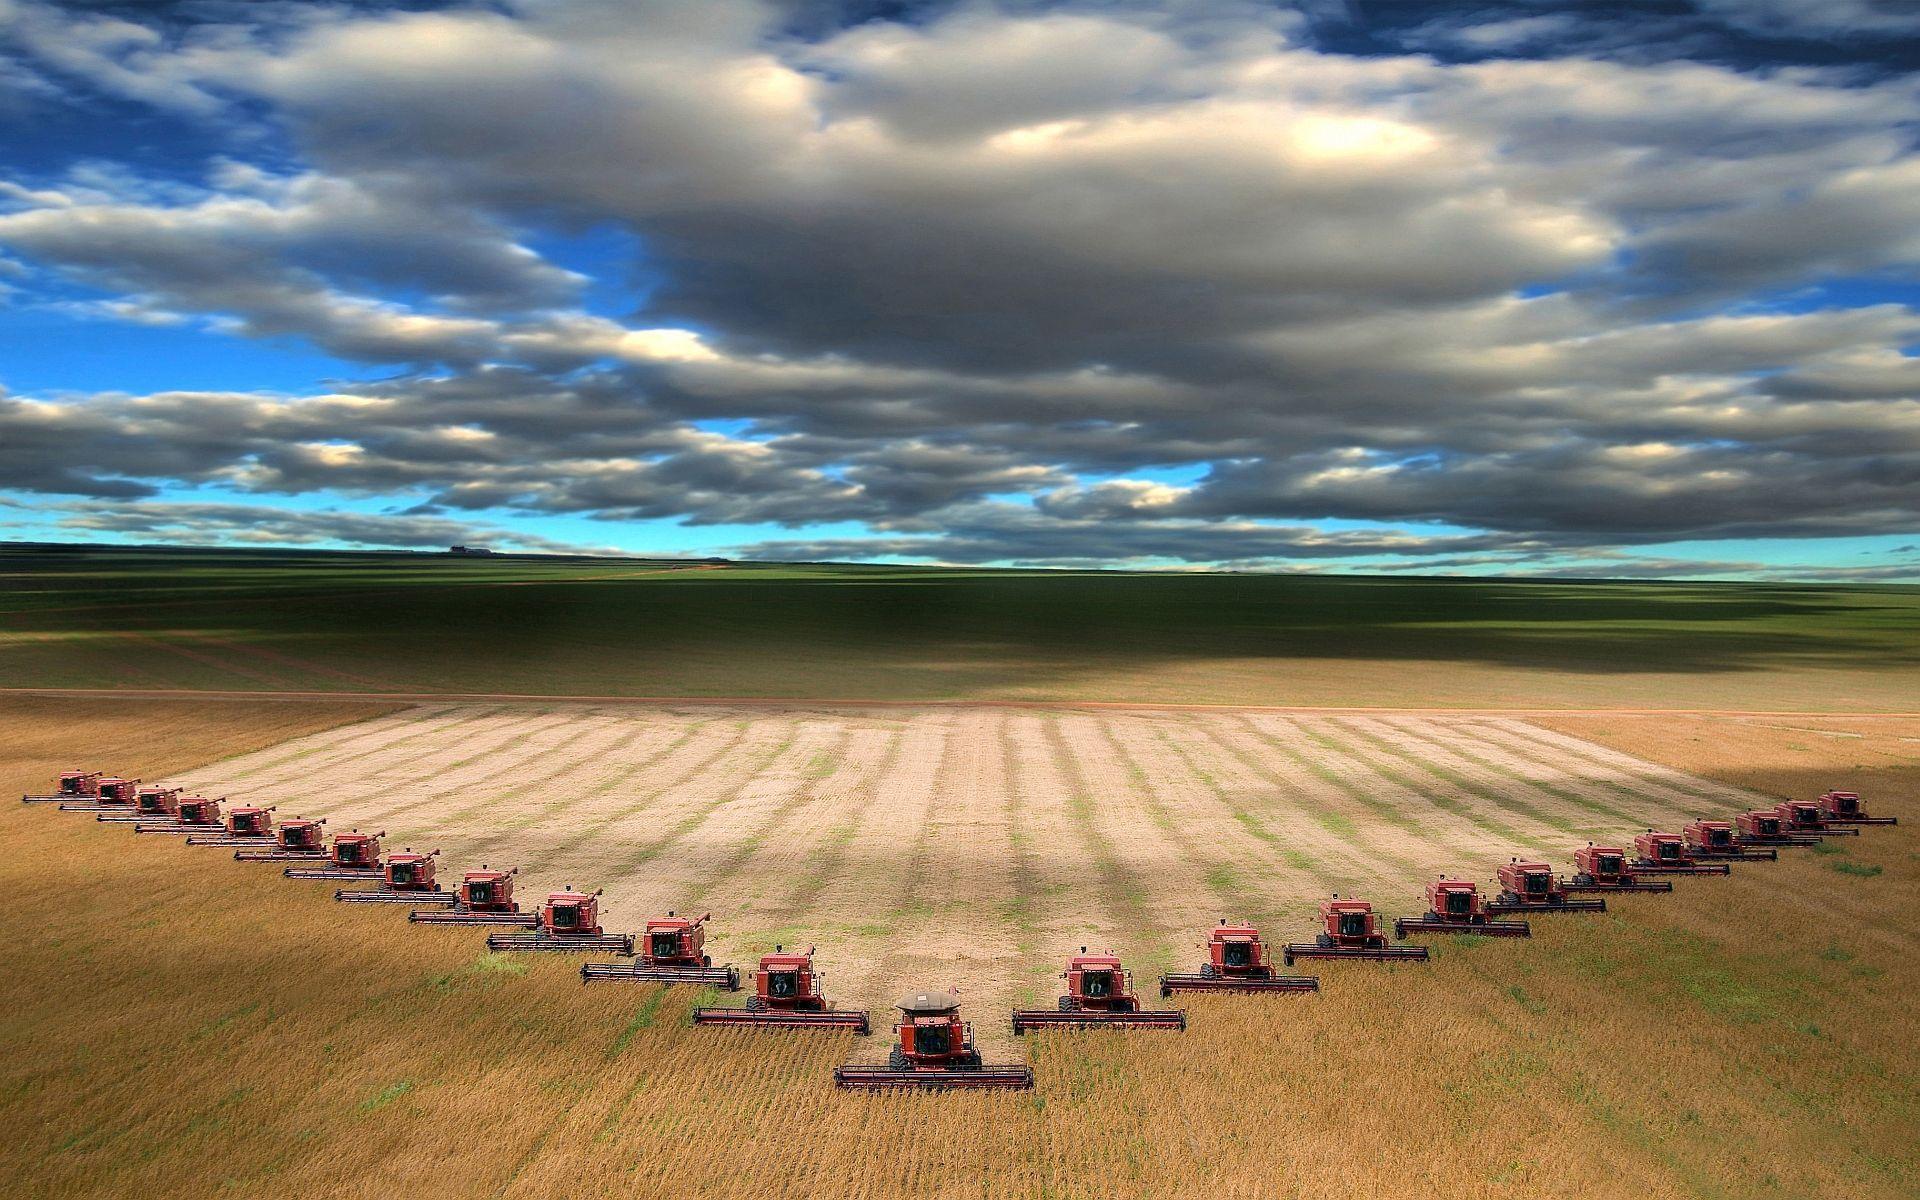 Combines harvesting wheat in I believe North Dakota. Harvest time